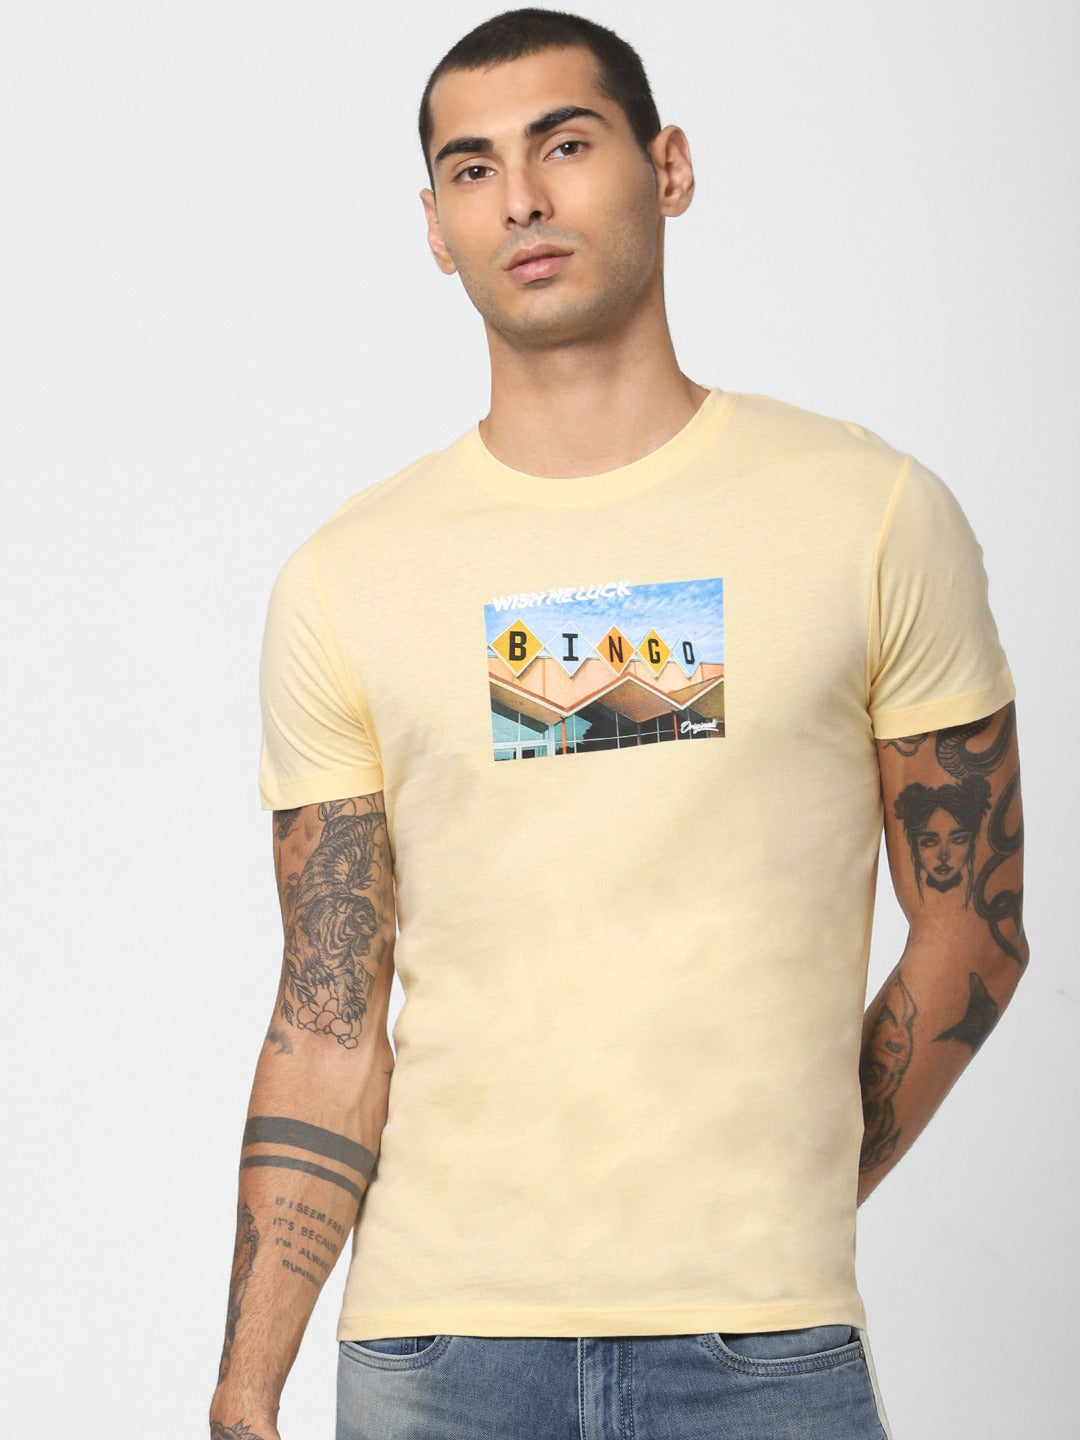 Jack Jones Men Yellow Slim Fit Printed Round Neck Pure Cotton T-shirt-2107599